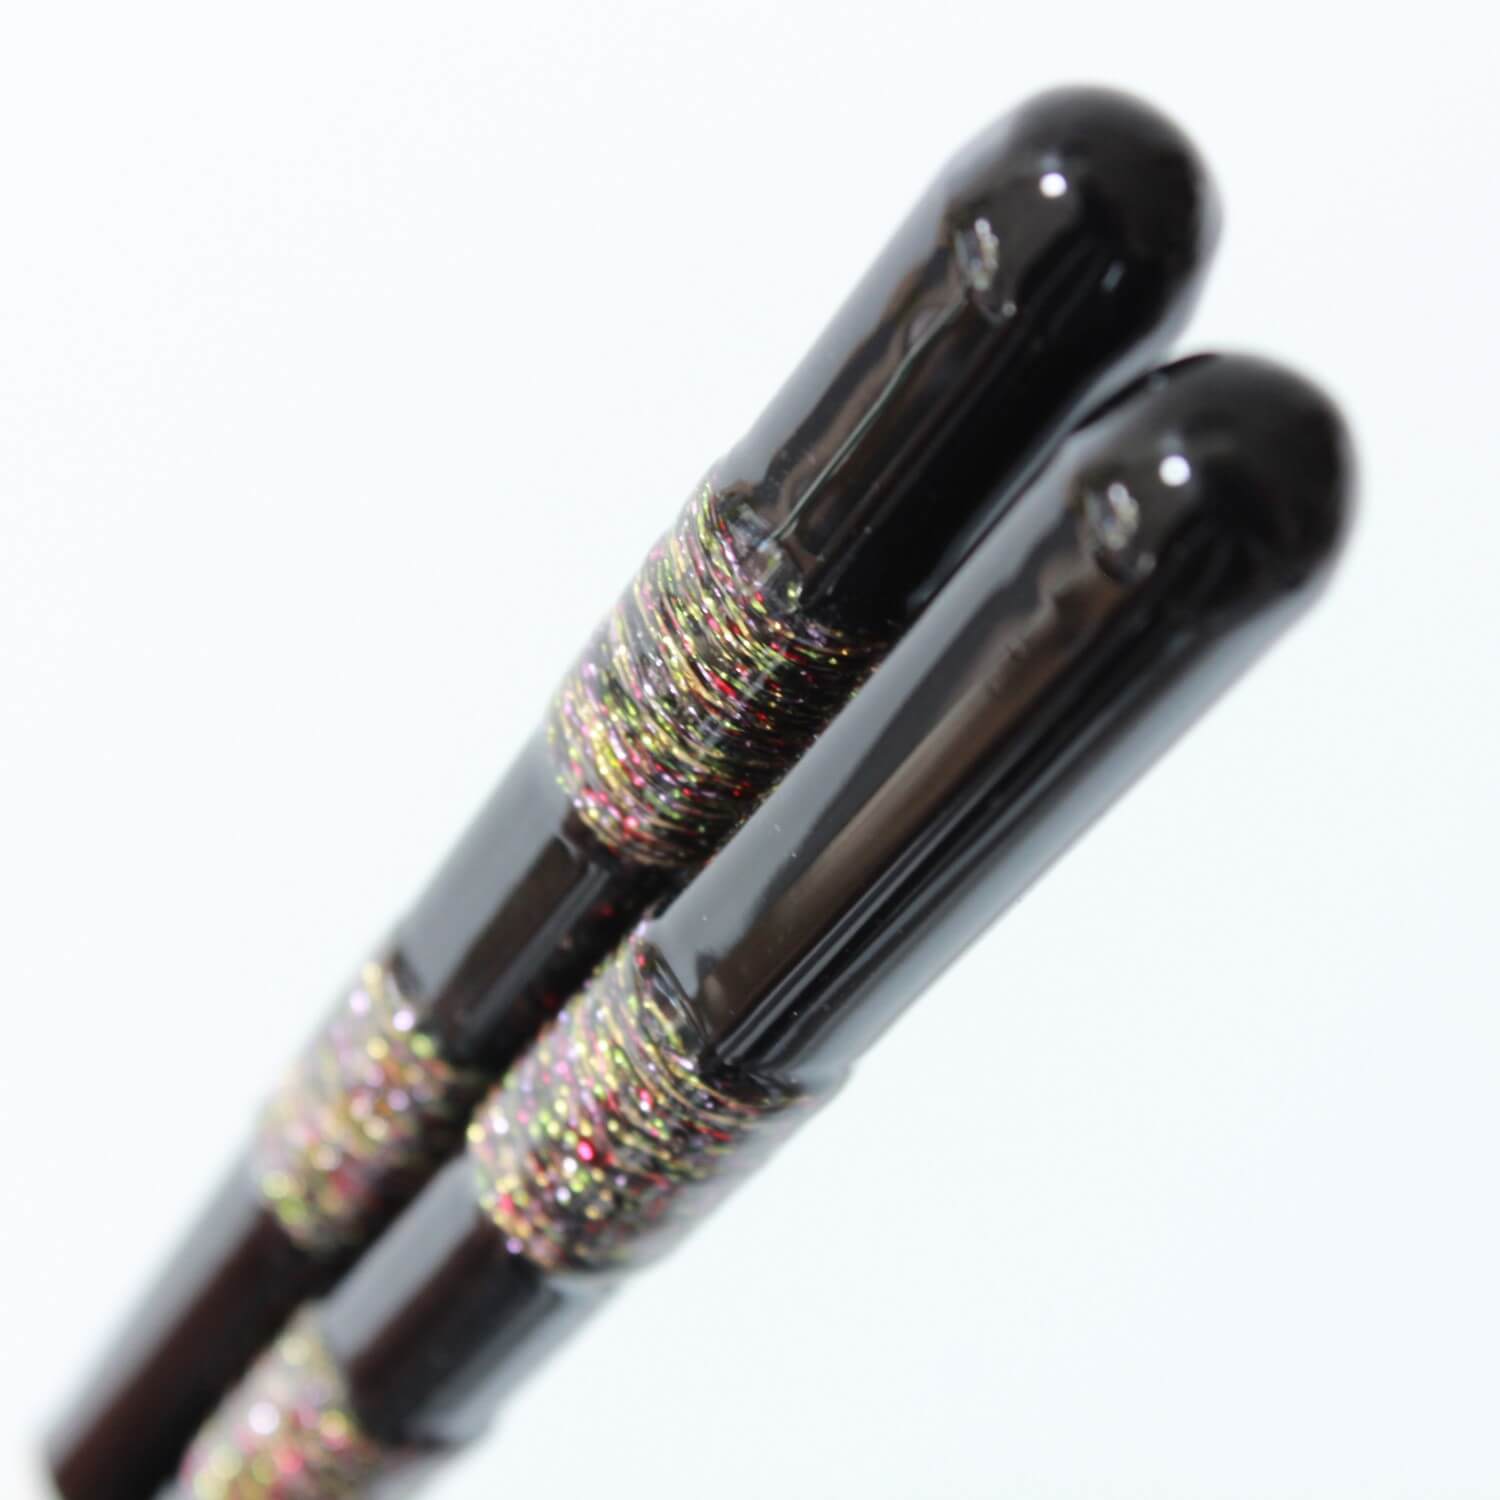 ultra close shot showing handles of hananoito chopsticks